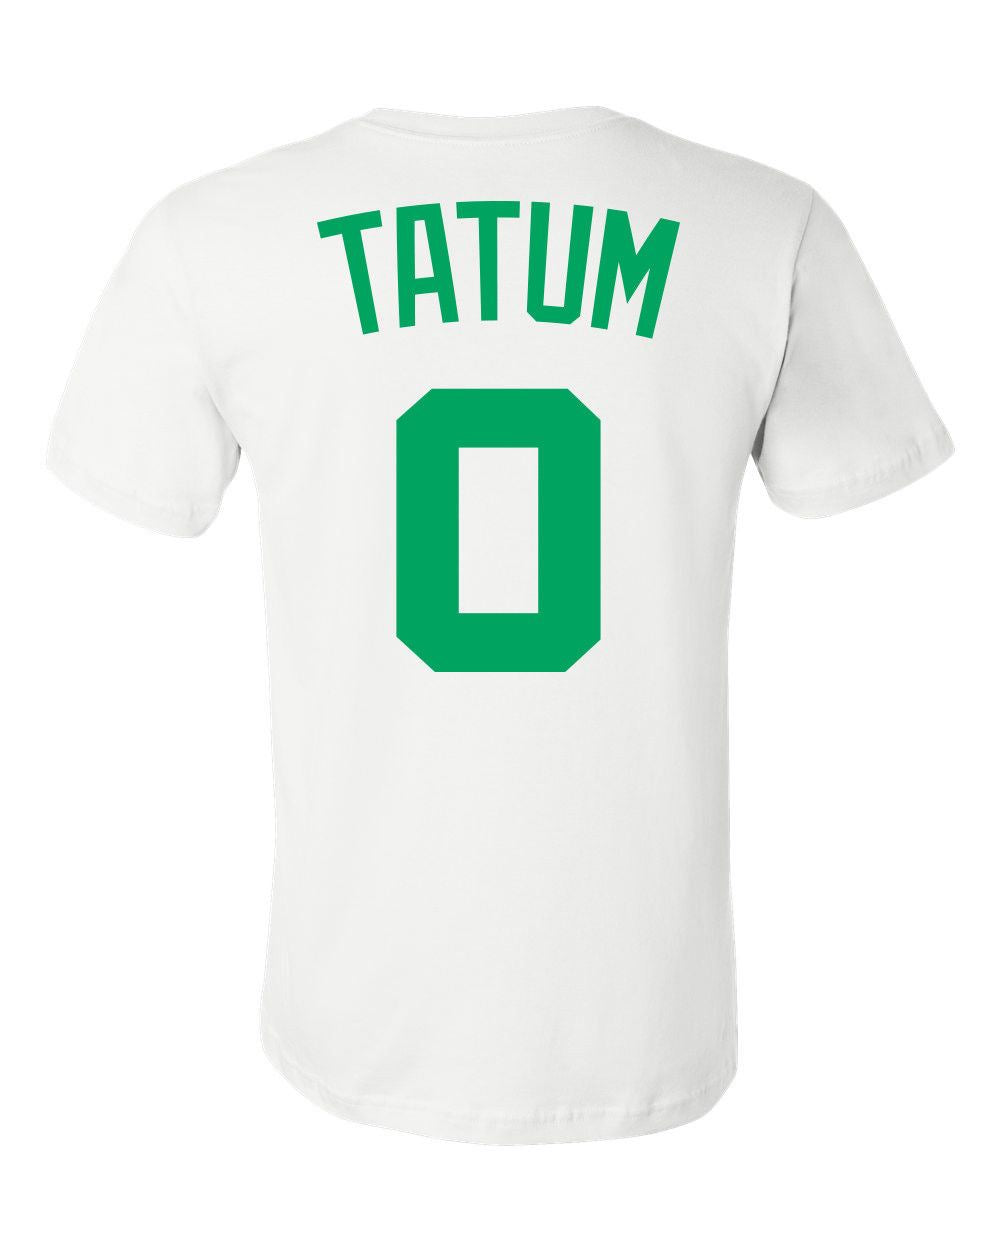 Jayson Tatum 0 Boston Celtics Baseball Jacket